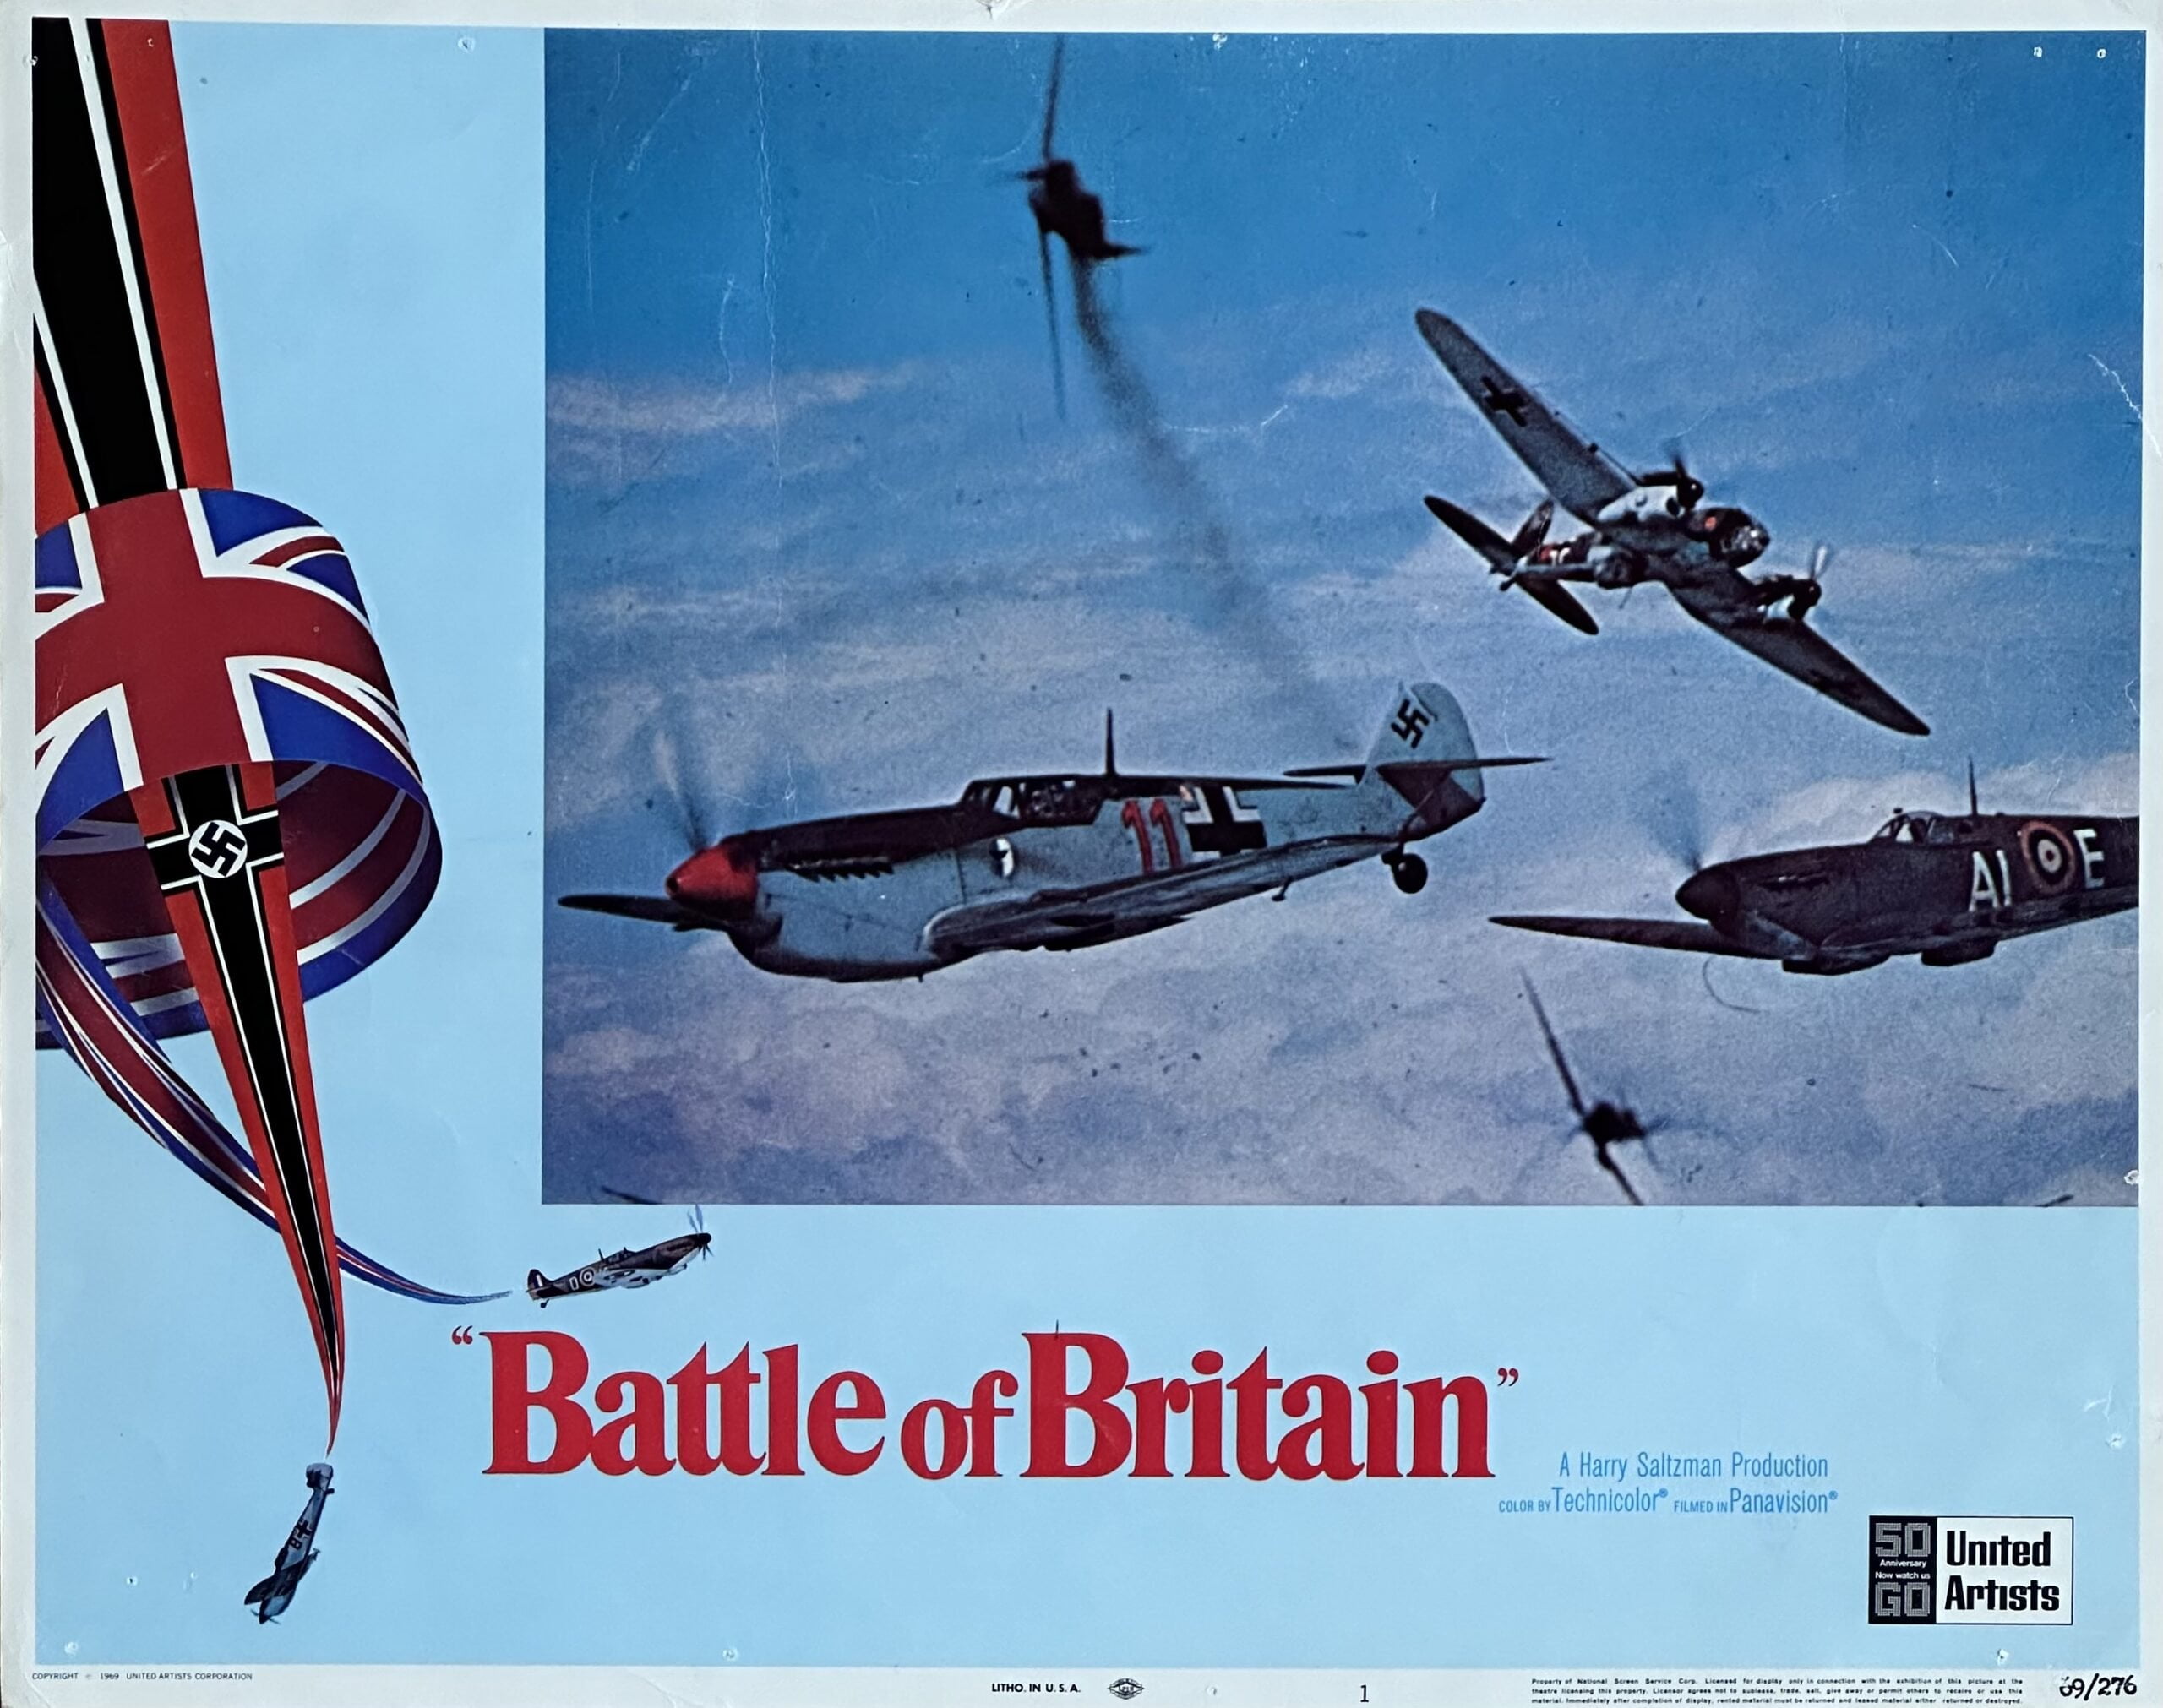 Original vintage cinema lobby card movie poster for war classic, Battle of Britain